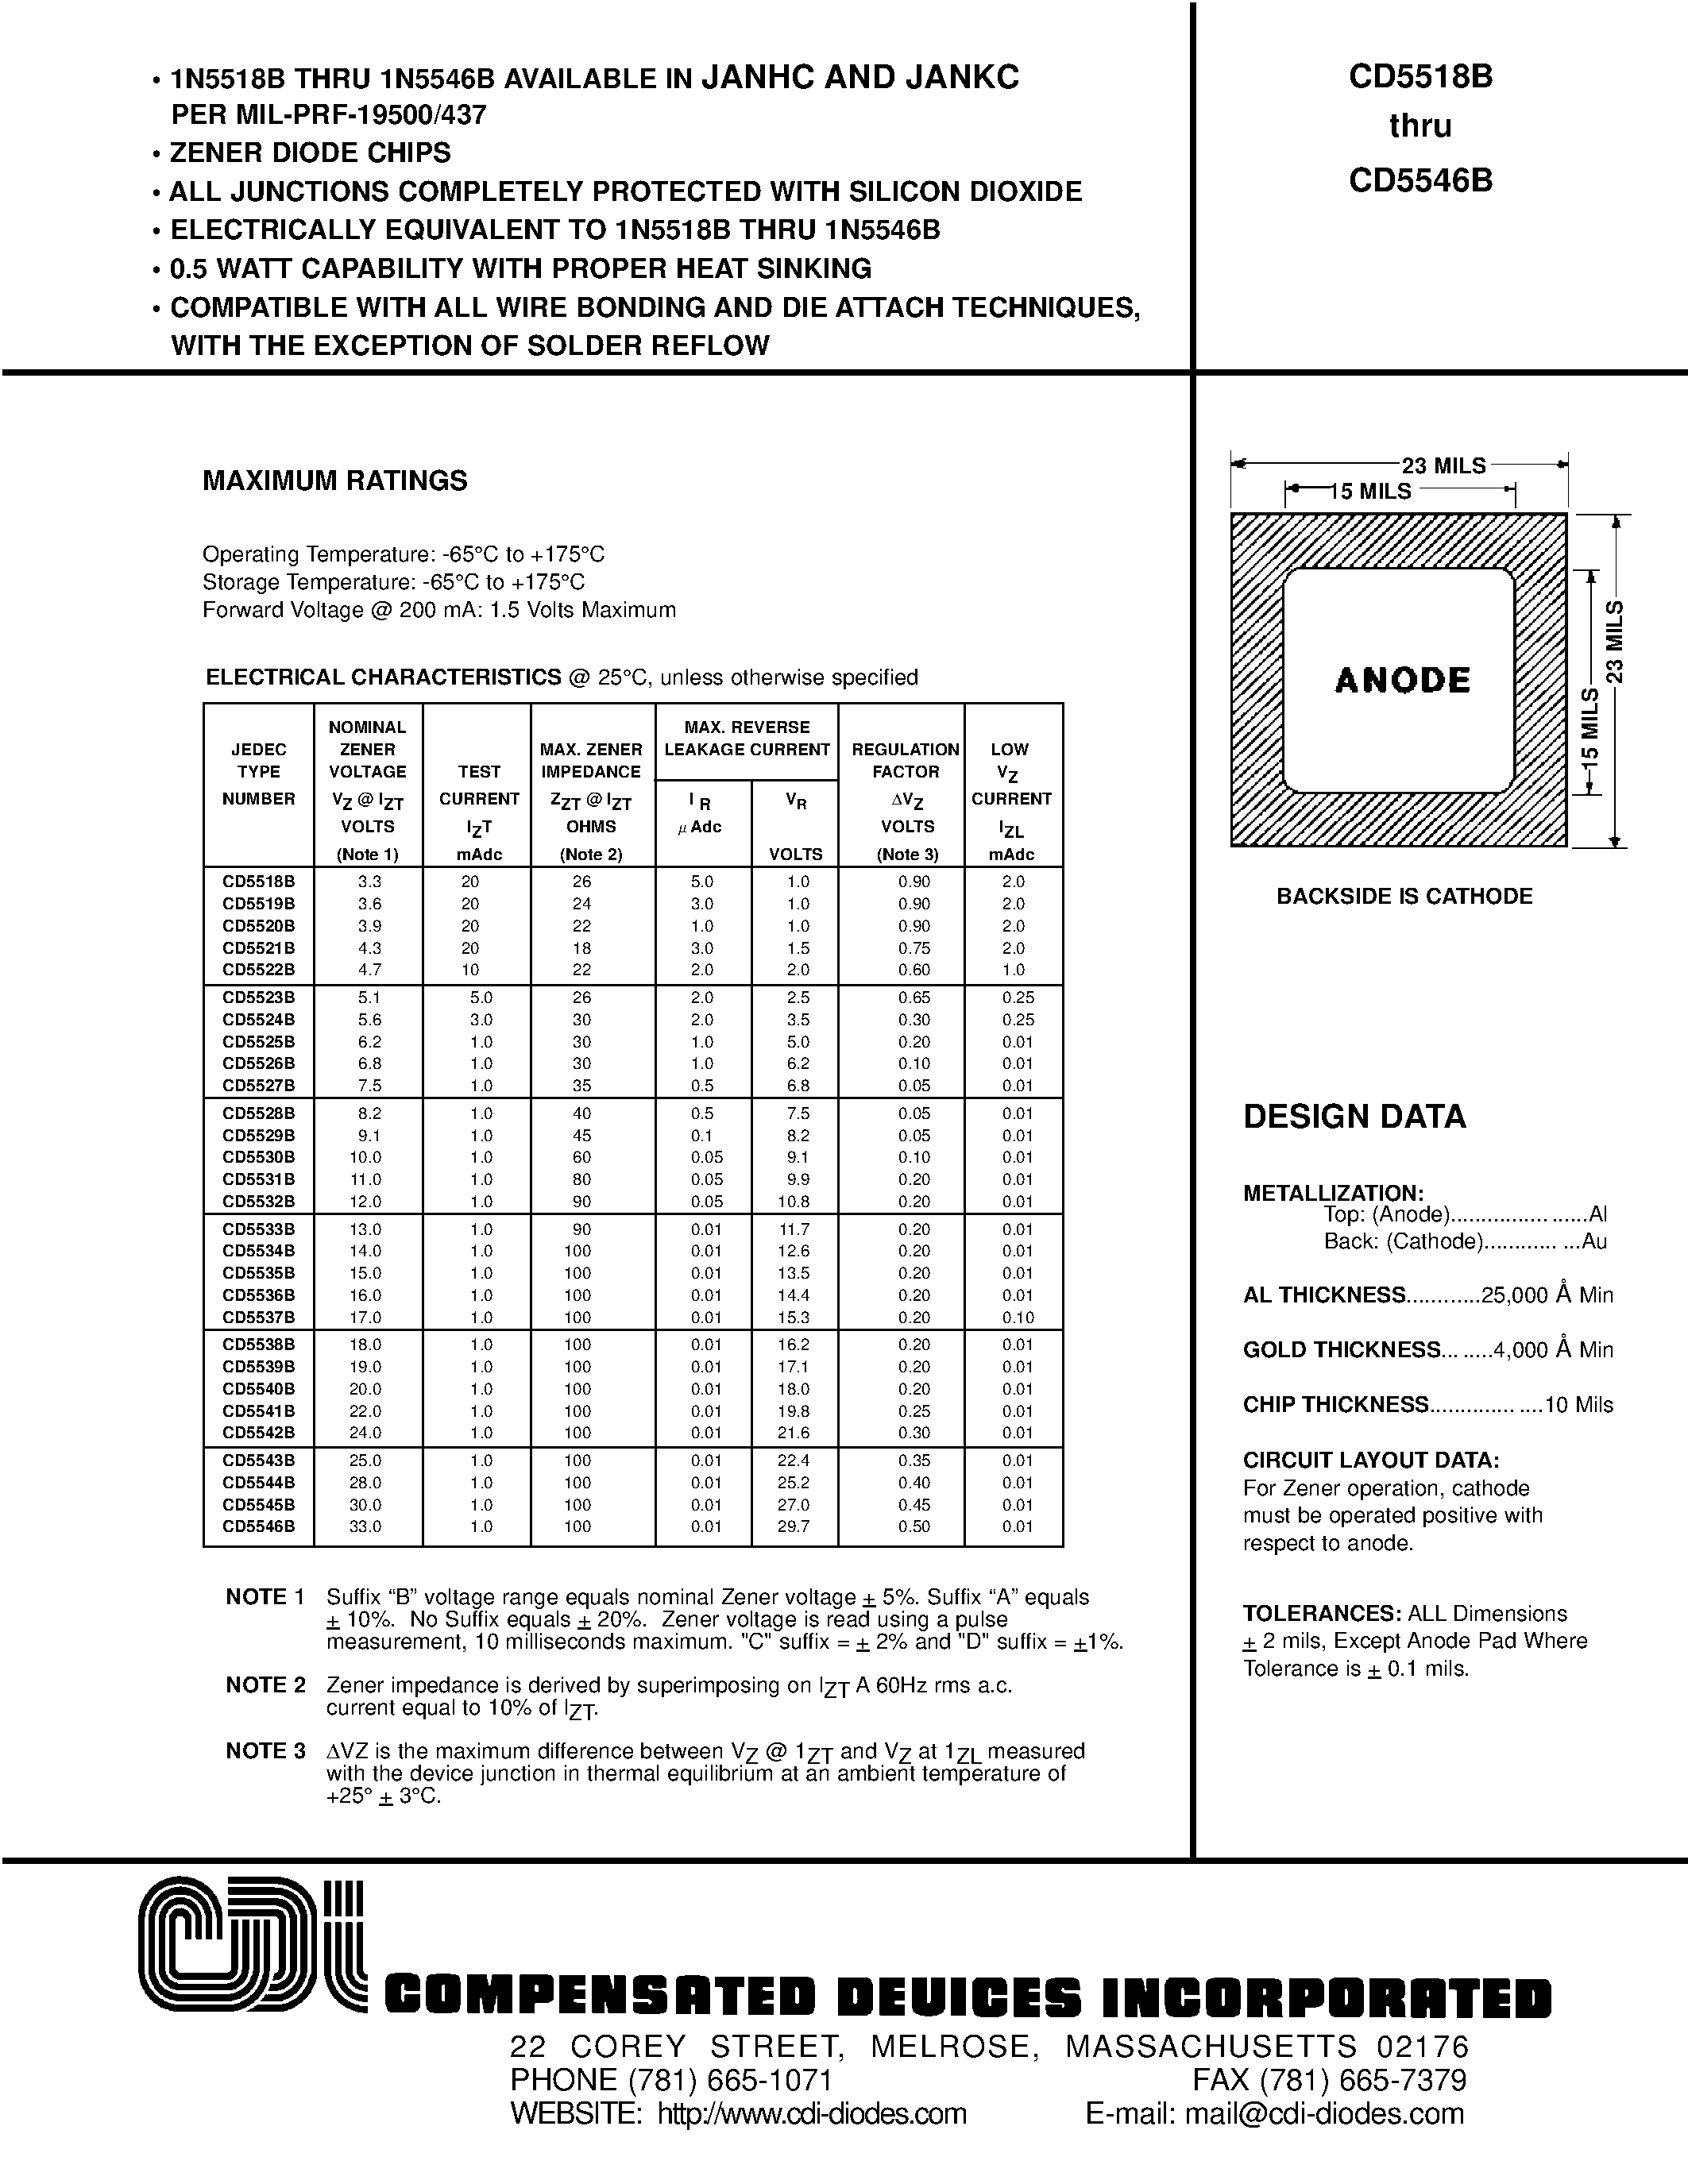 Datasheet CD5538B - ZENER DIODE CHIPS page 1